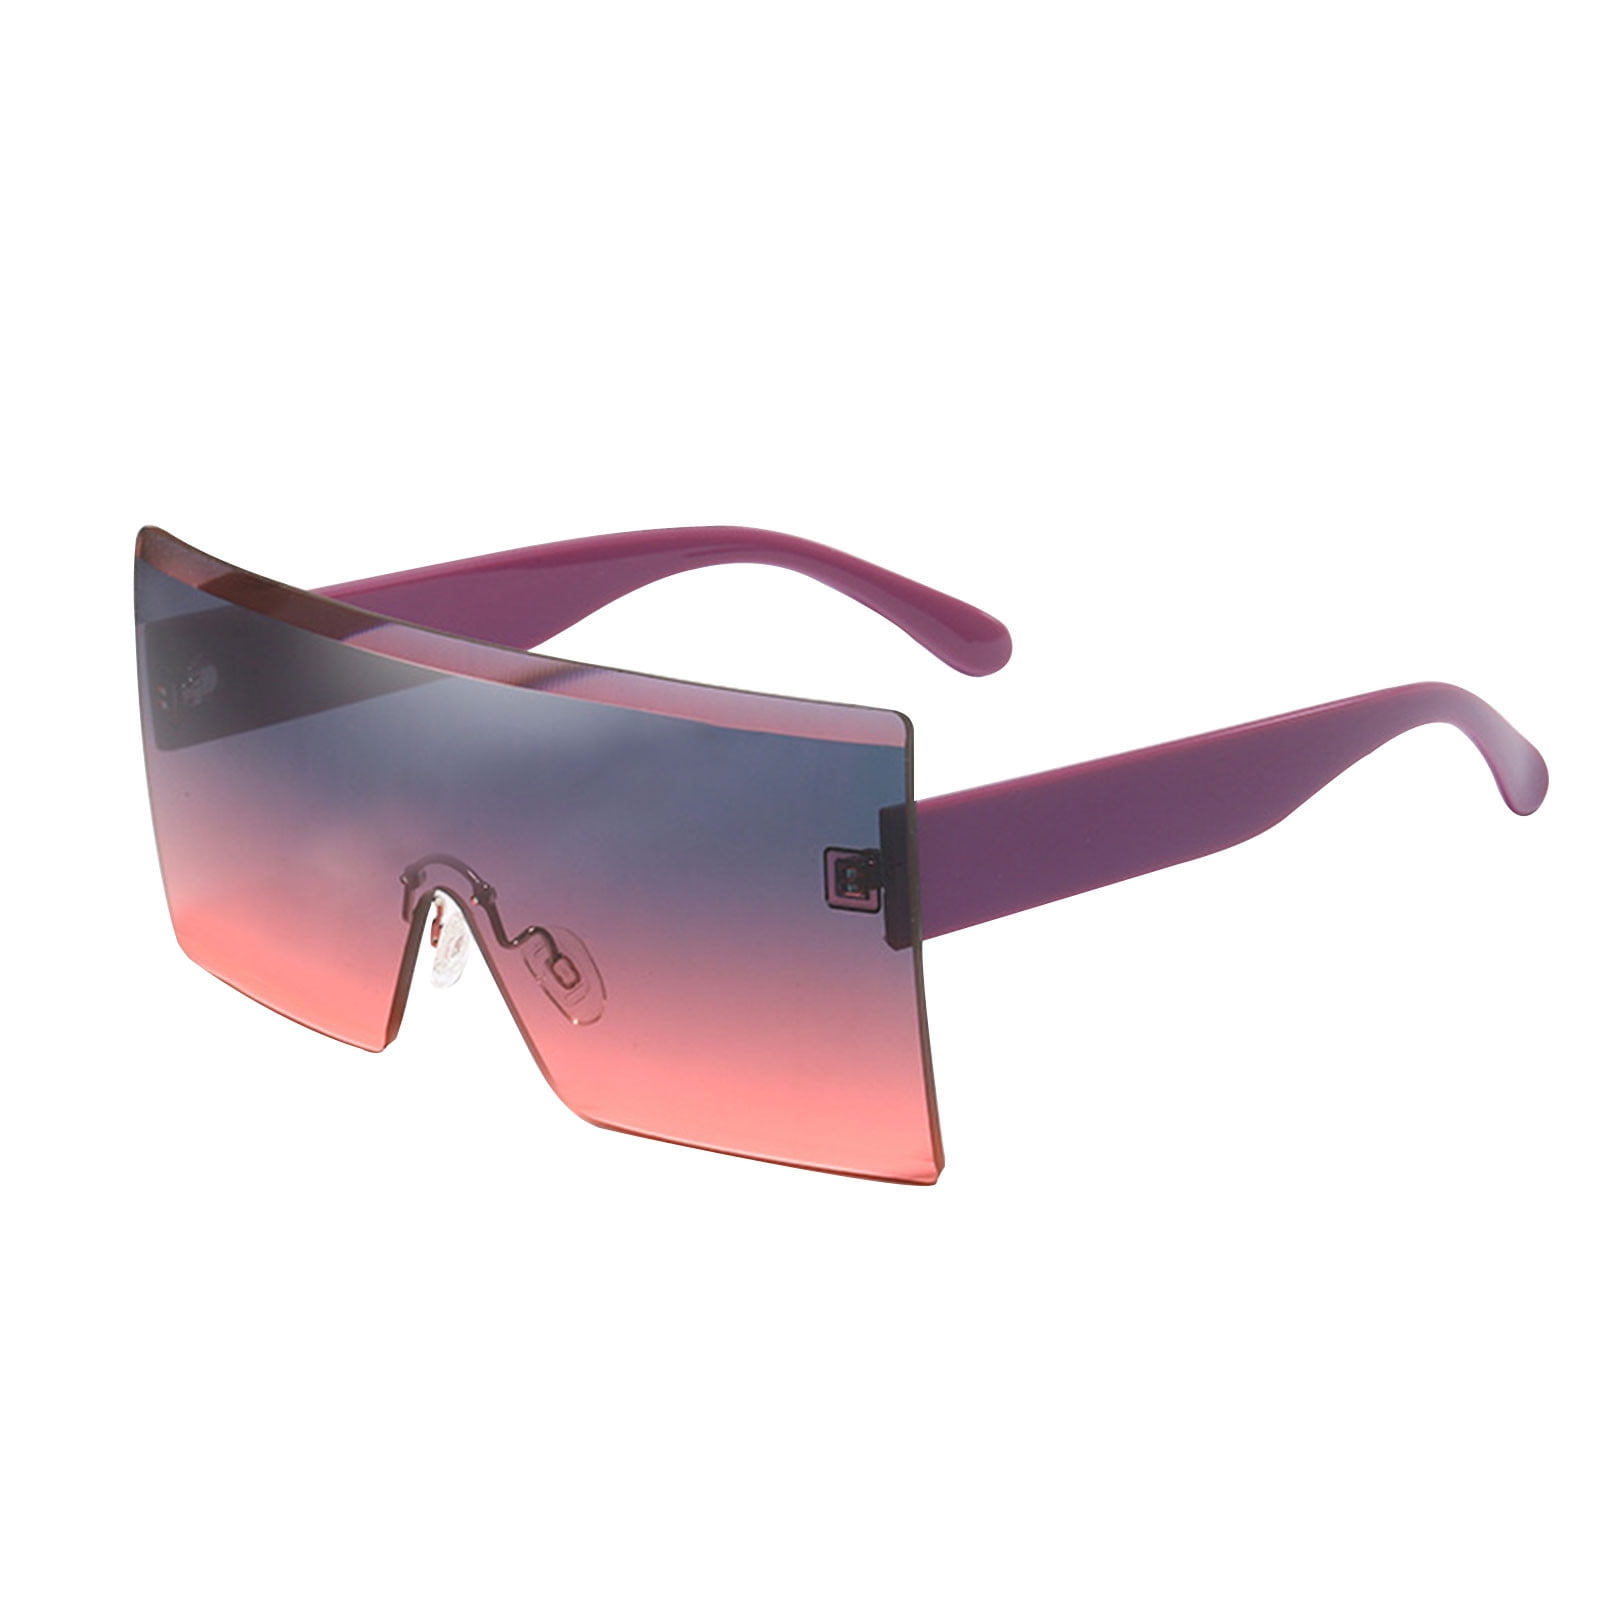 EQWLJWE High-definition Anti-UV Glasses Outdoor Sports Fashion